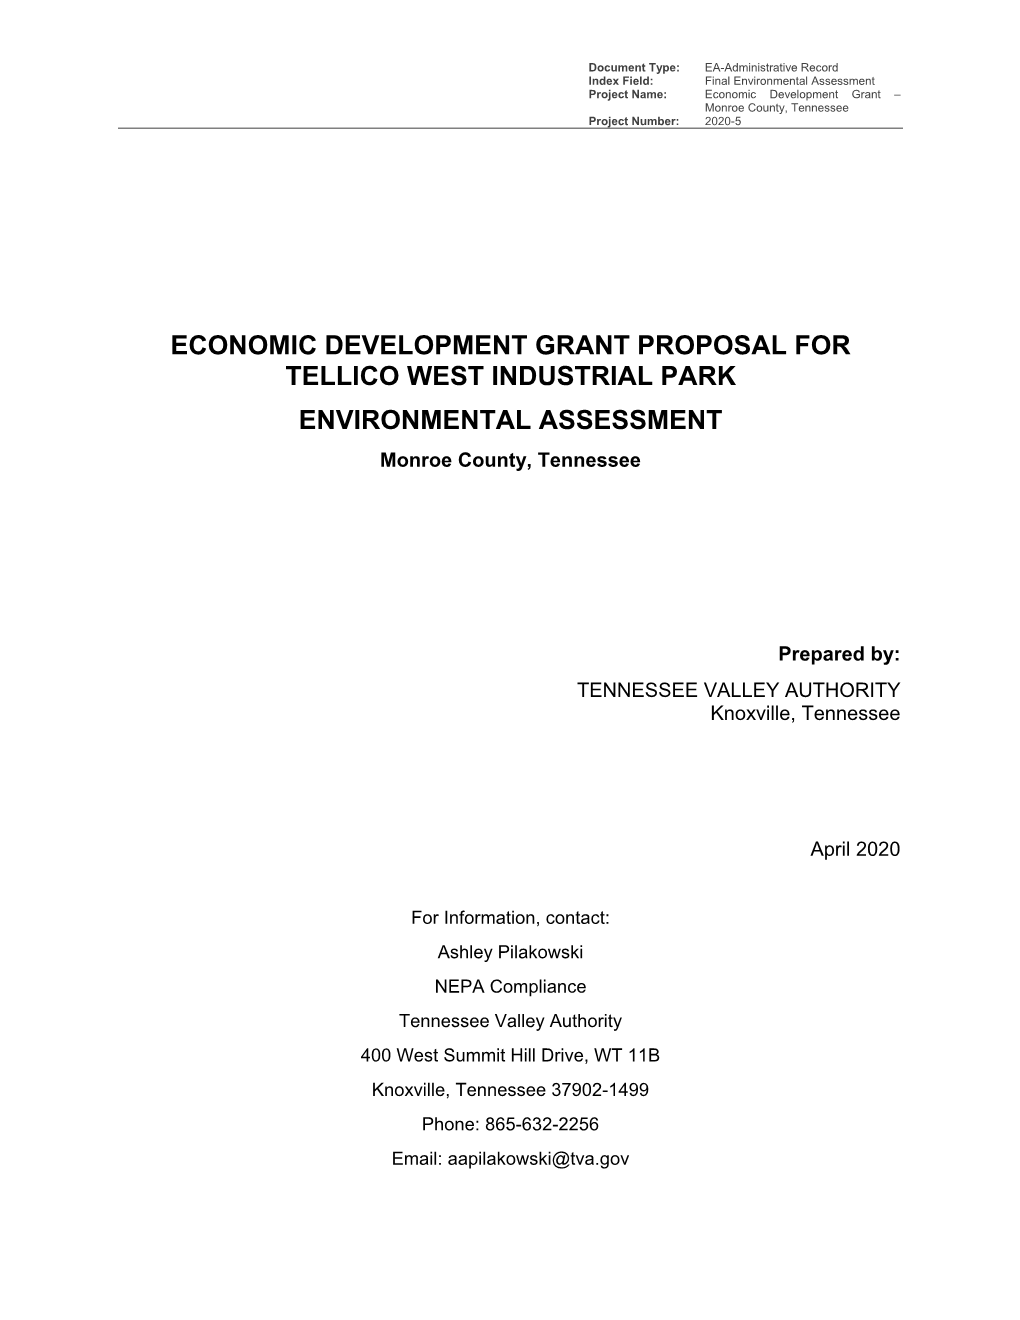 Monroe County Final Environmental Assessment